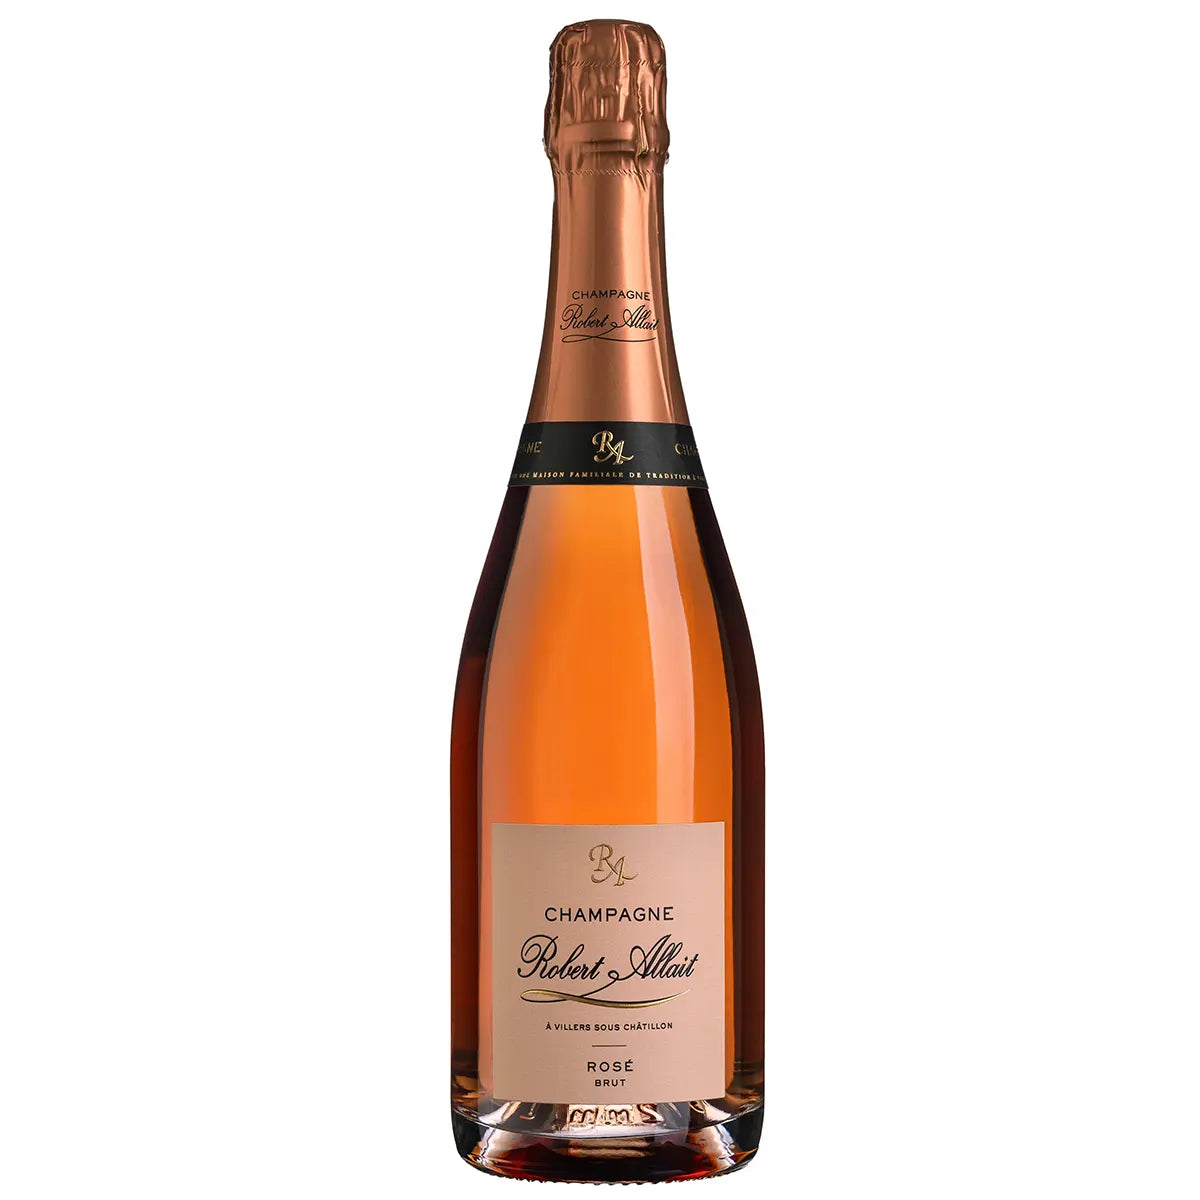 Champagne Robert Allait Rosé Brut